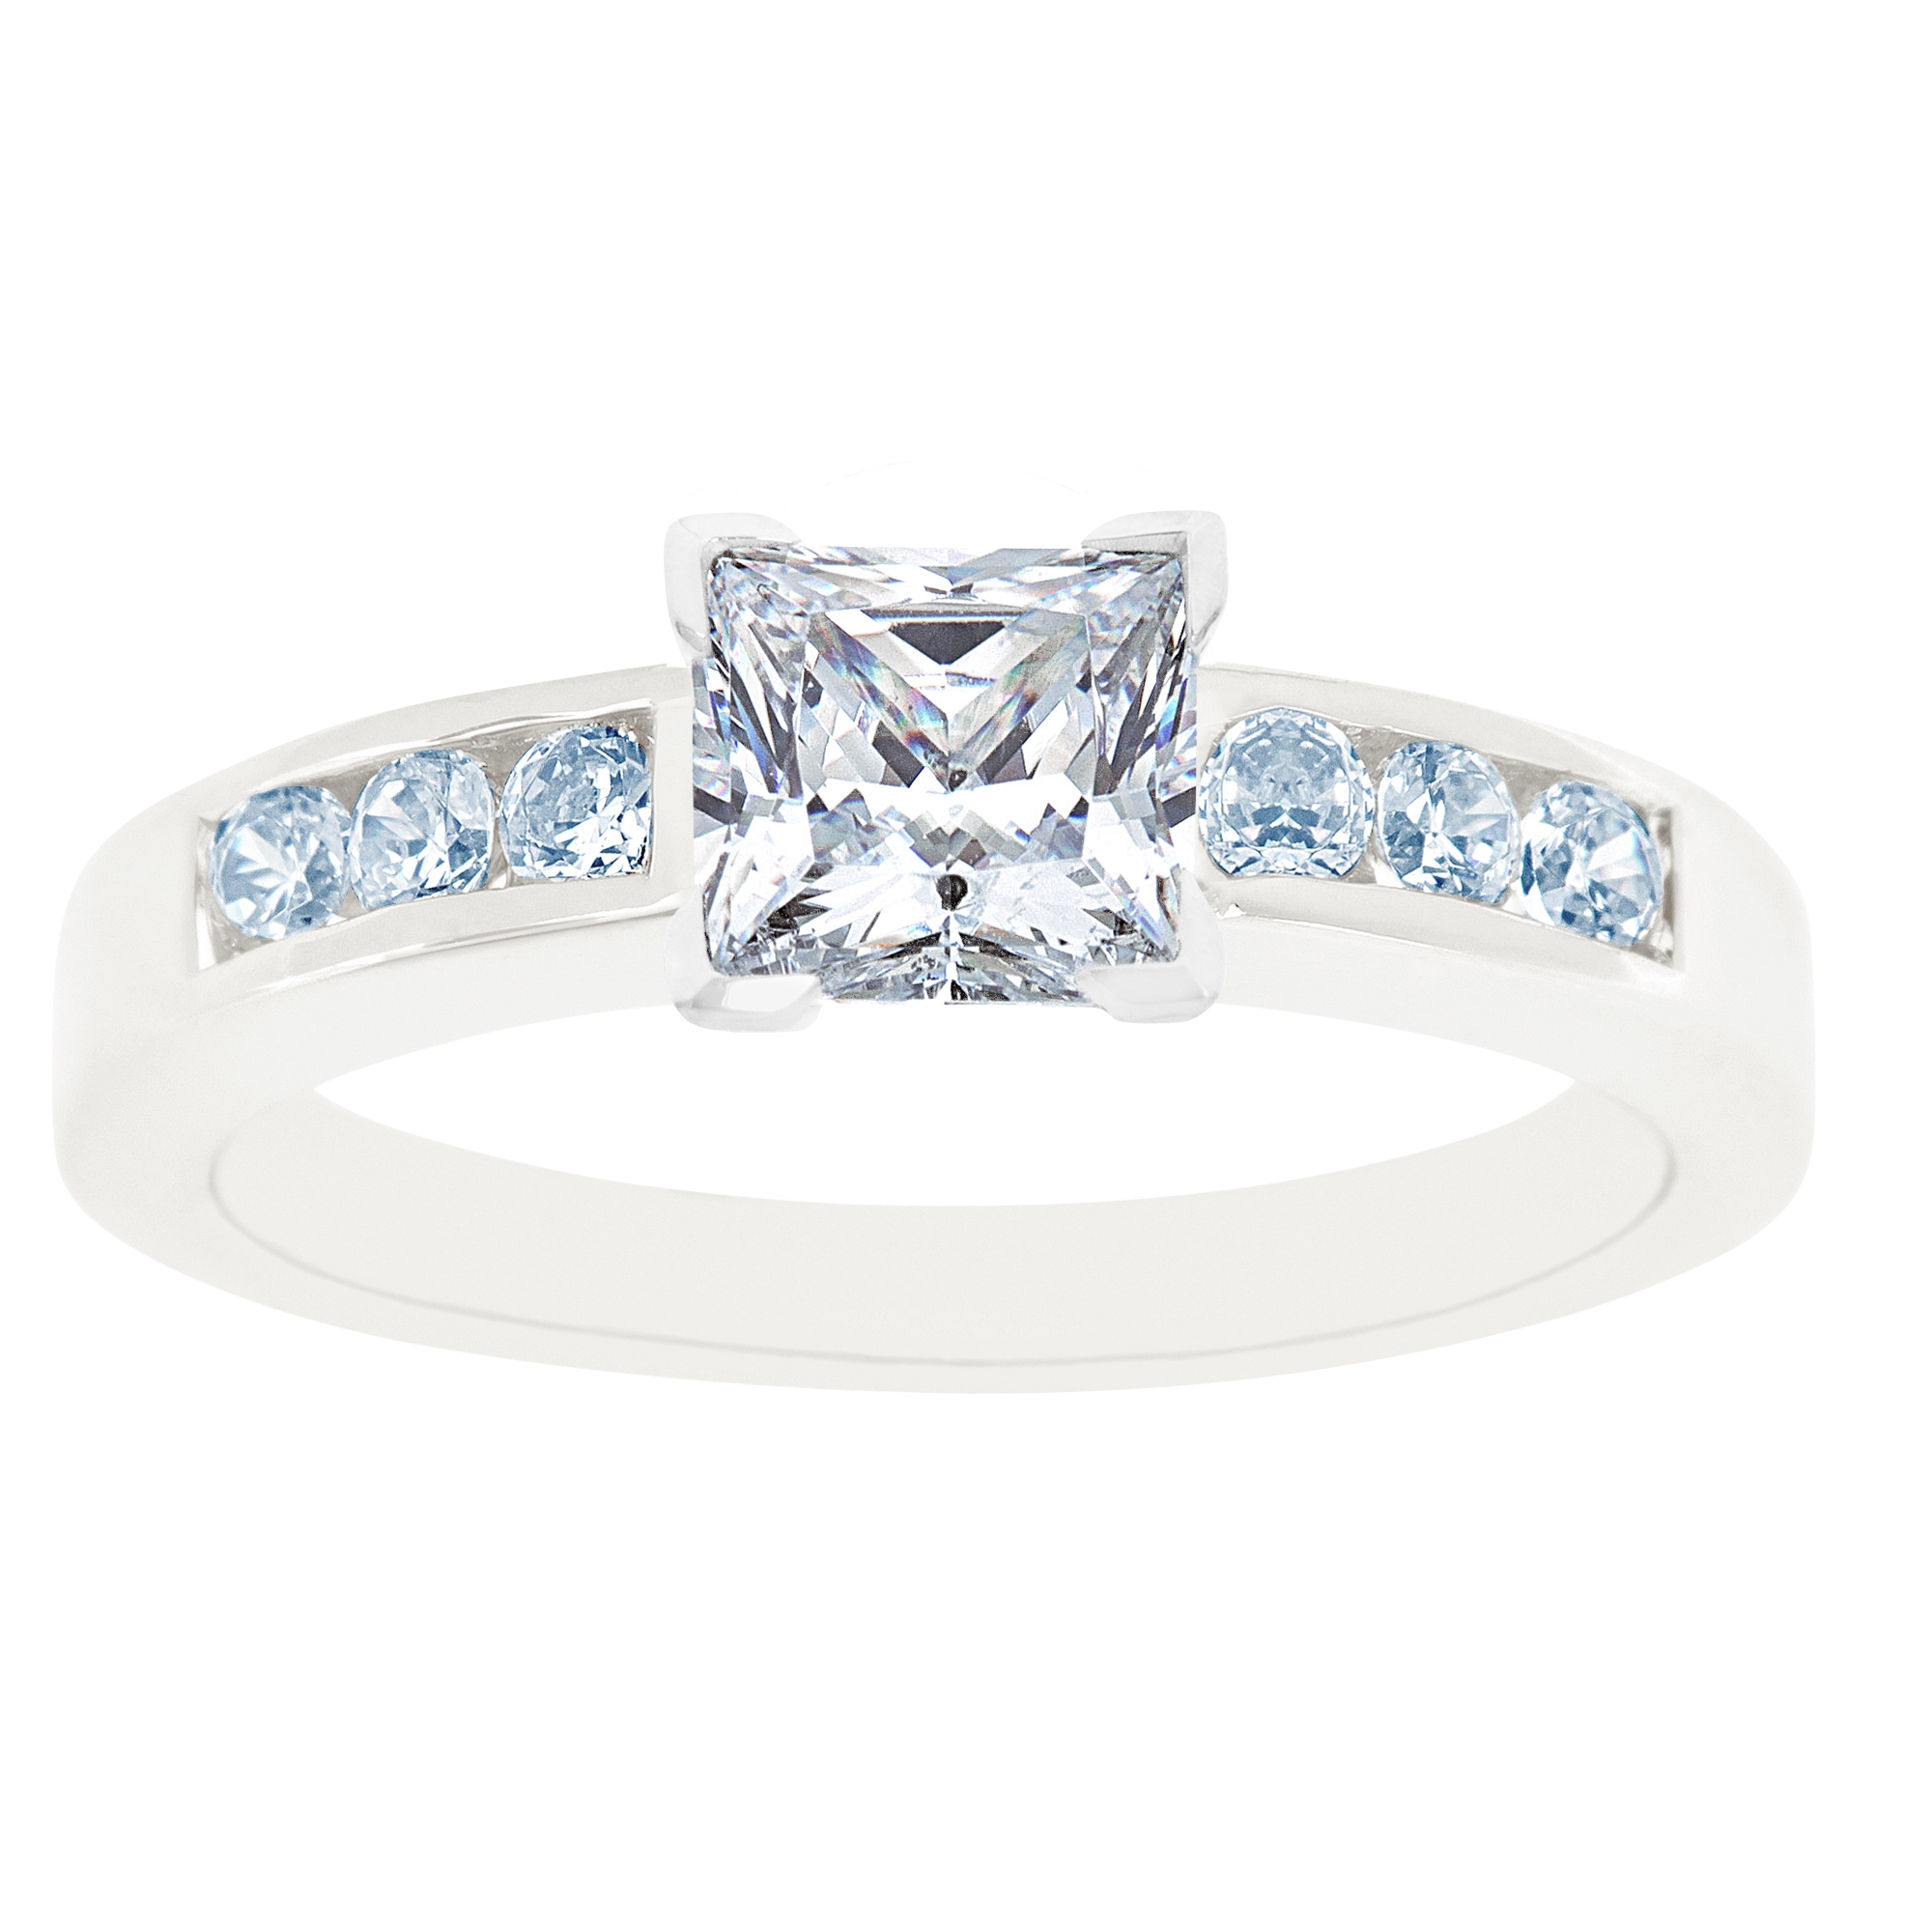 New York City Diamond District 14K White Gold Princess Cut Certified Diamond Engagement Ring